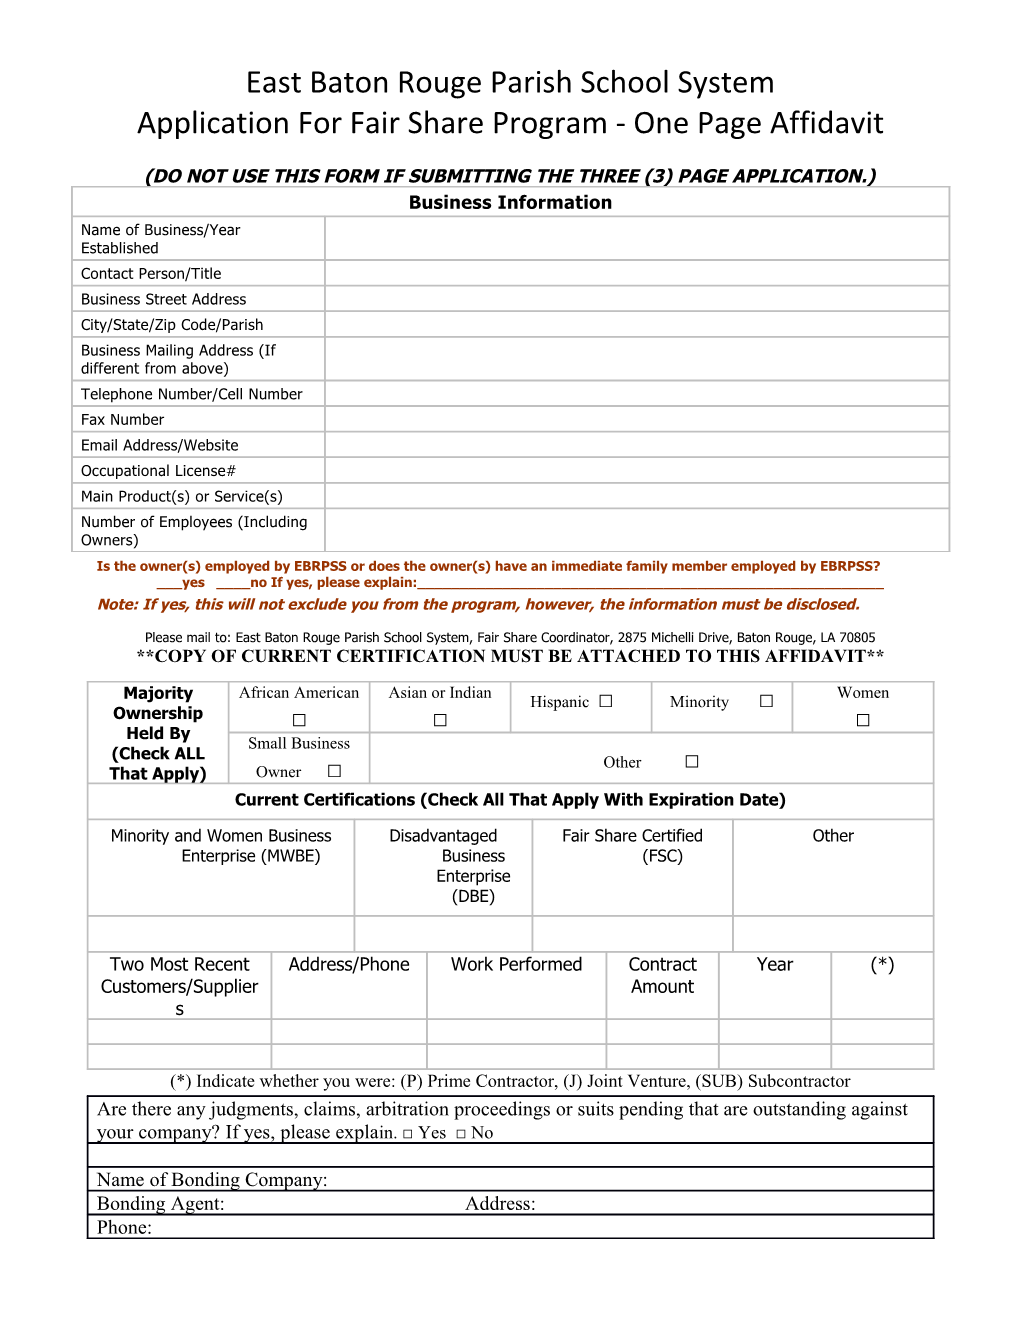 Application for Fair Share Program - One Page Affidavit